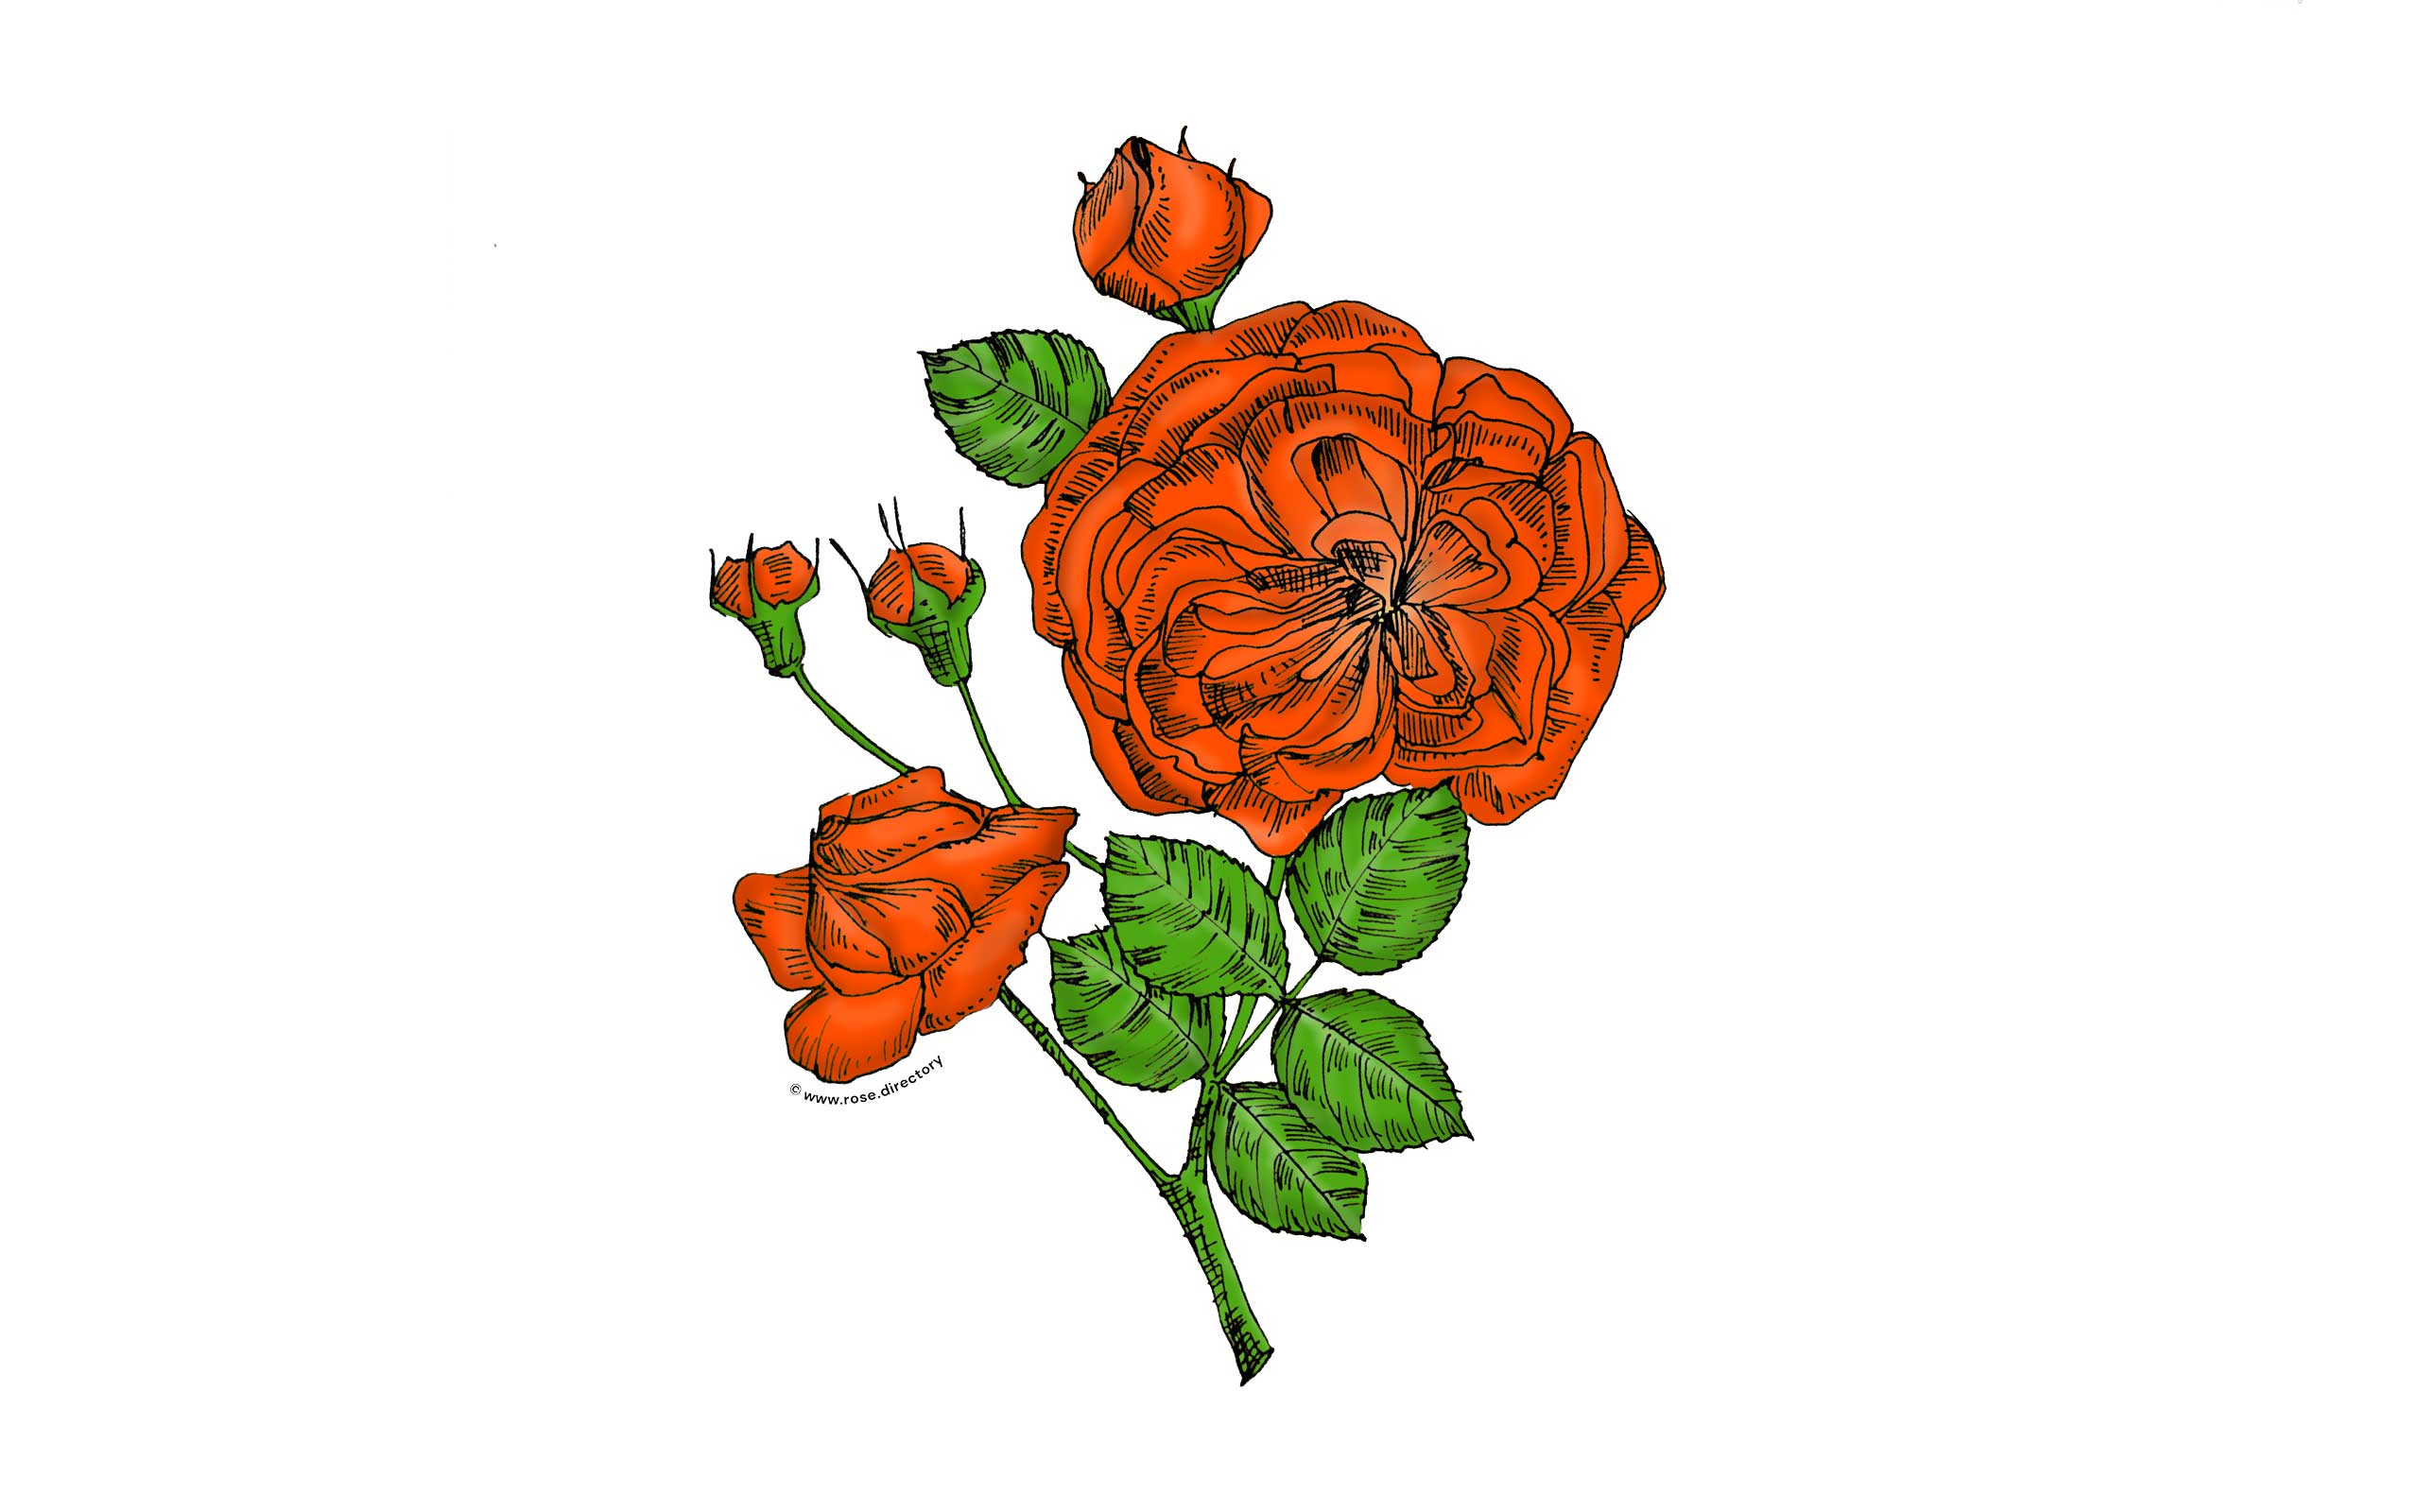 Orange Rosette Rose Bloom Semi-Double 8-15 Petals In 2 Rows